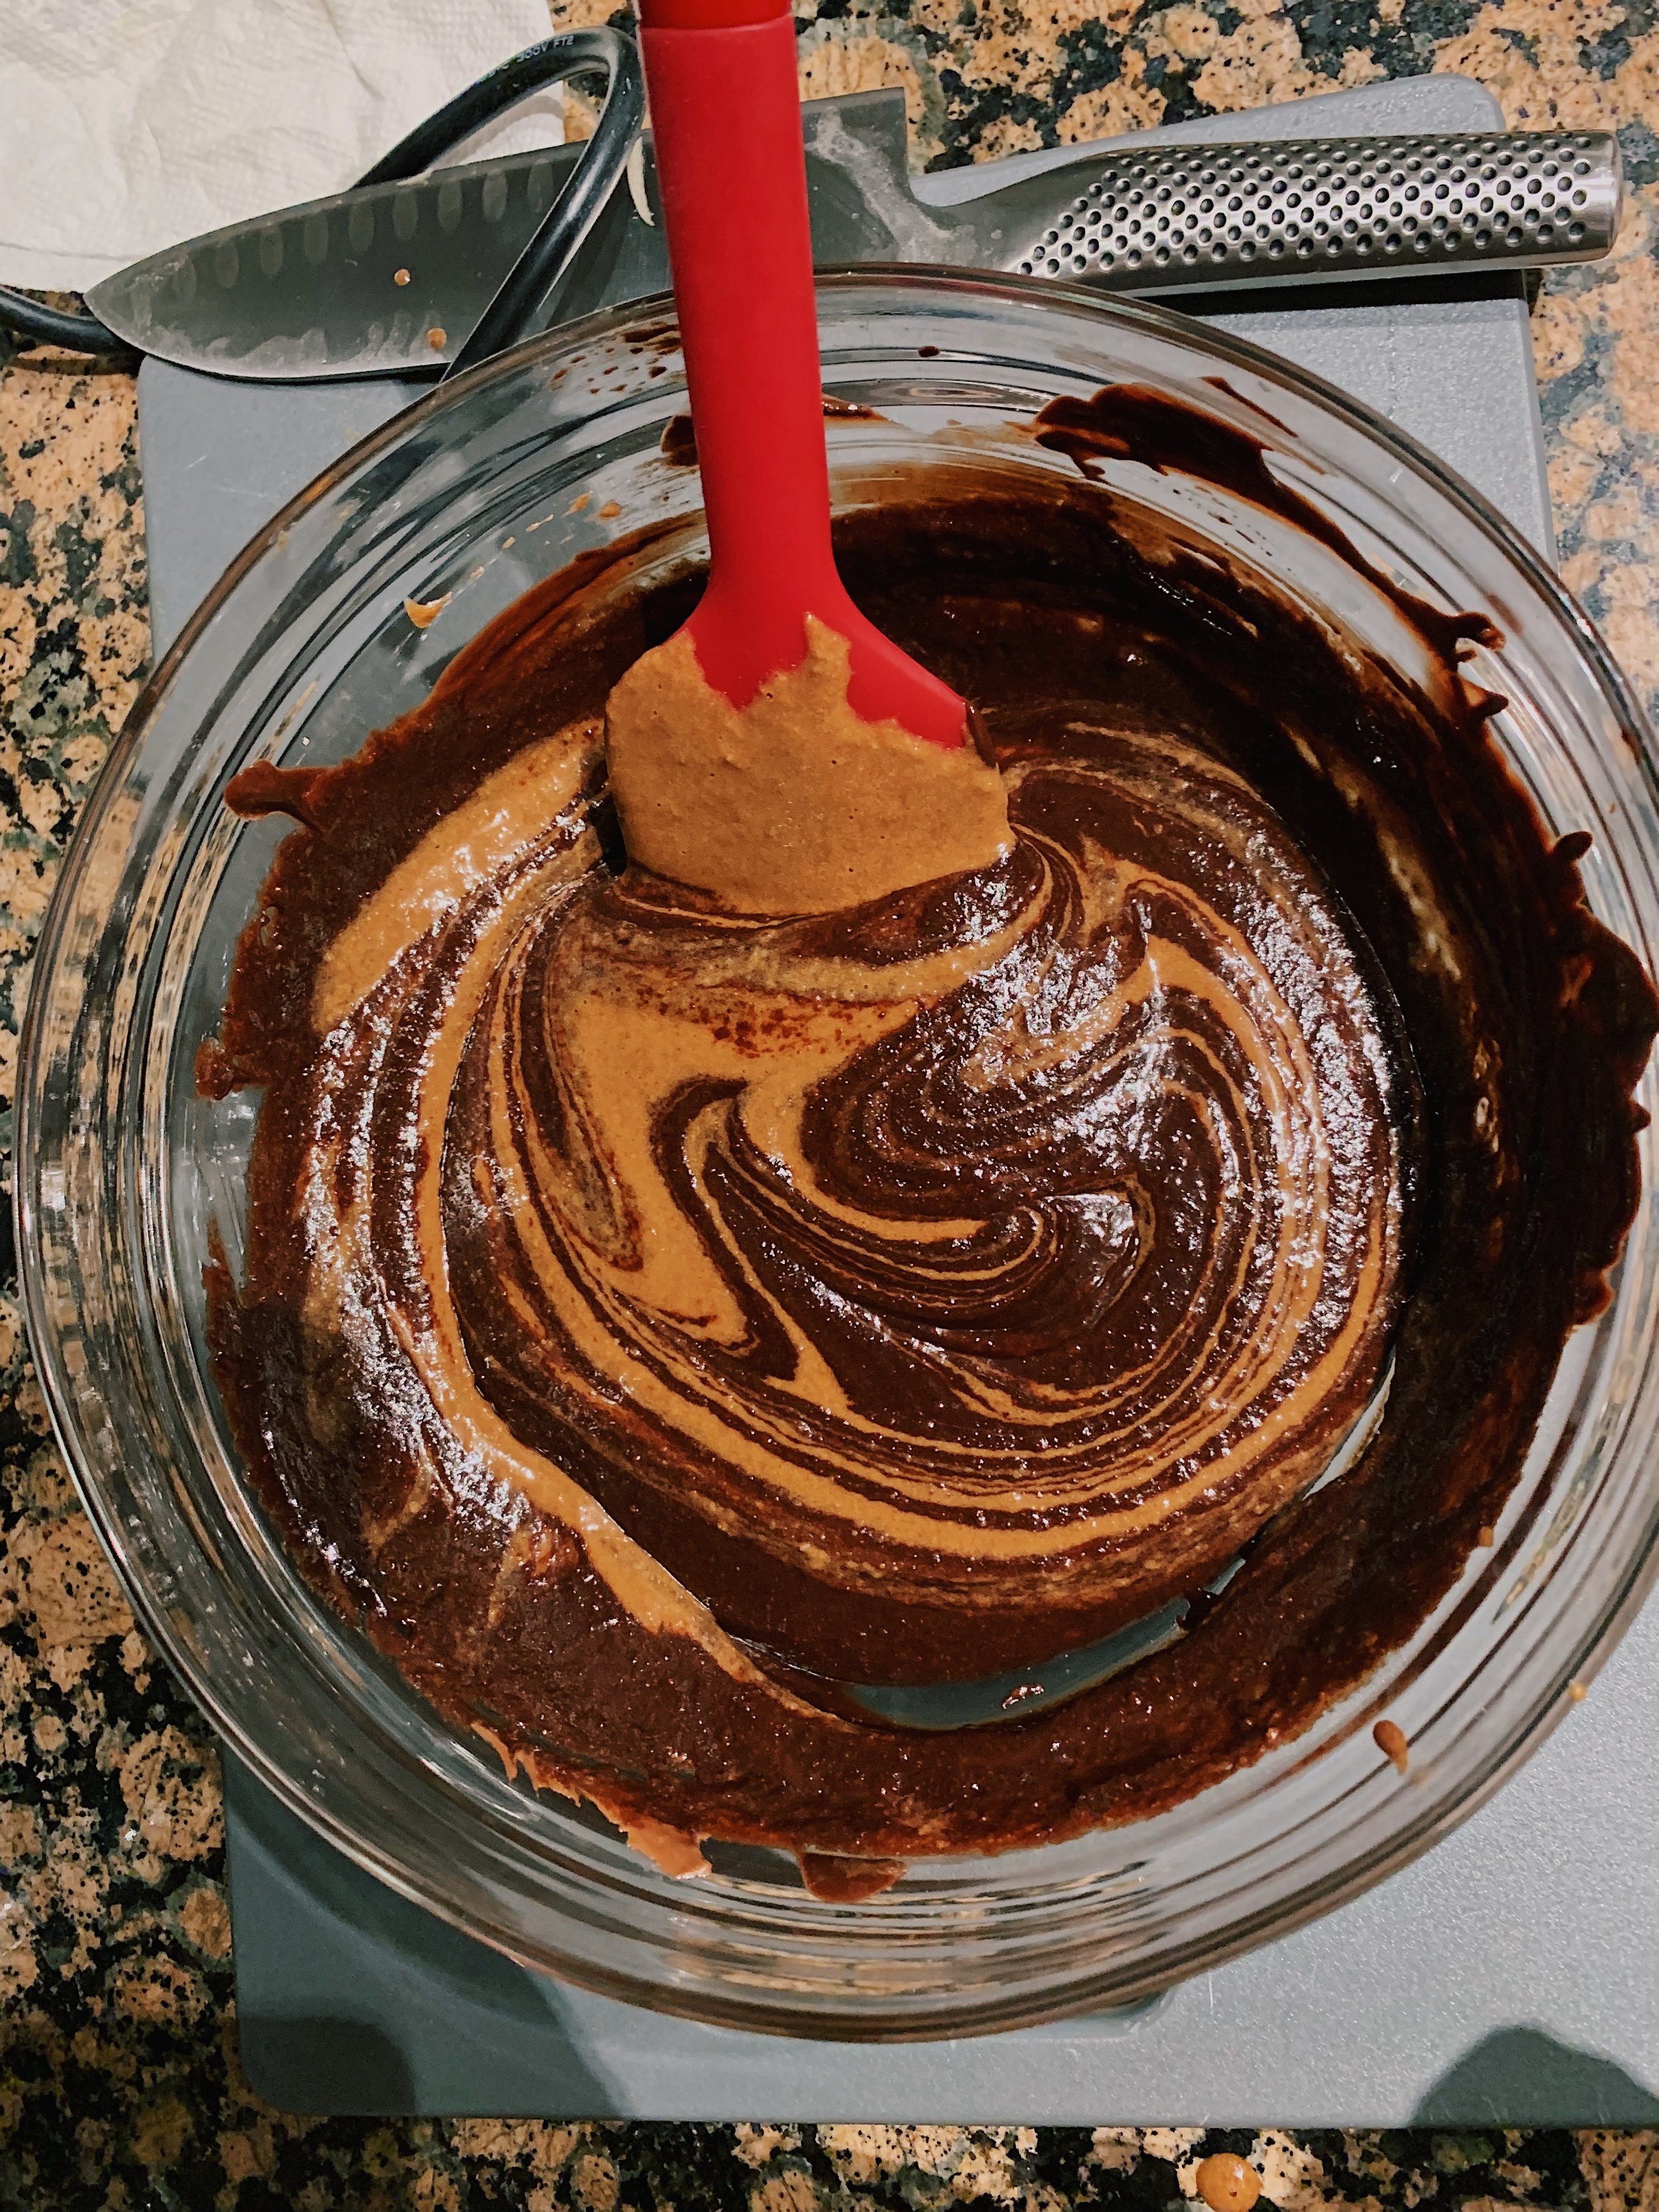 crispy-chocolate-cake-hazelnut-sour-cream-alison-roman-swirl.jpg